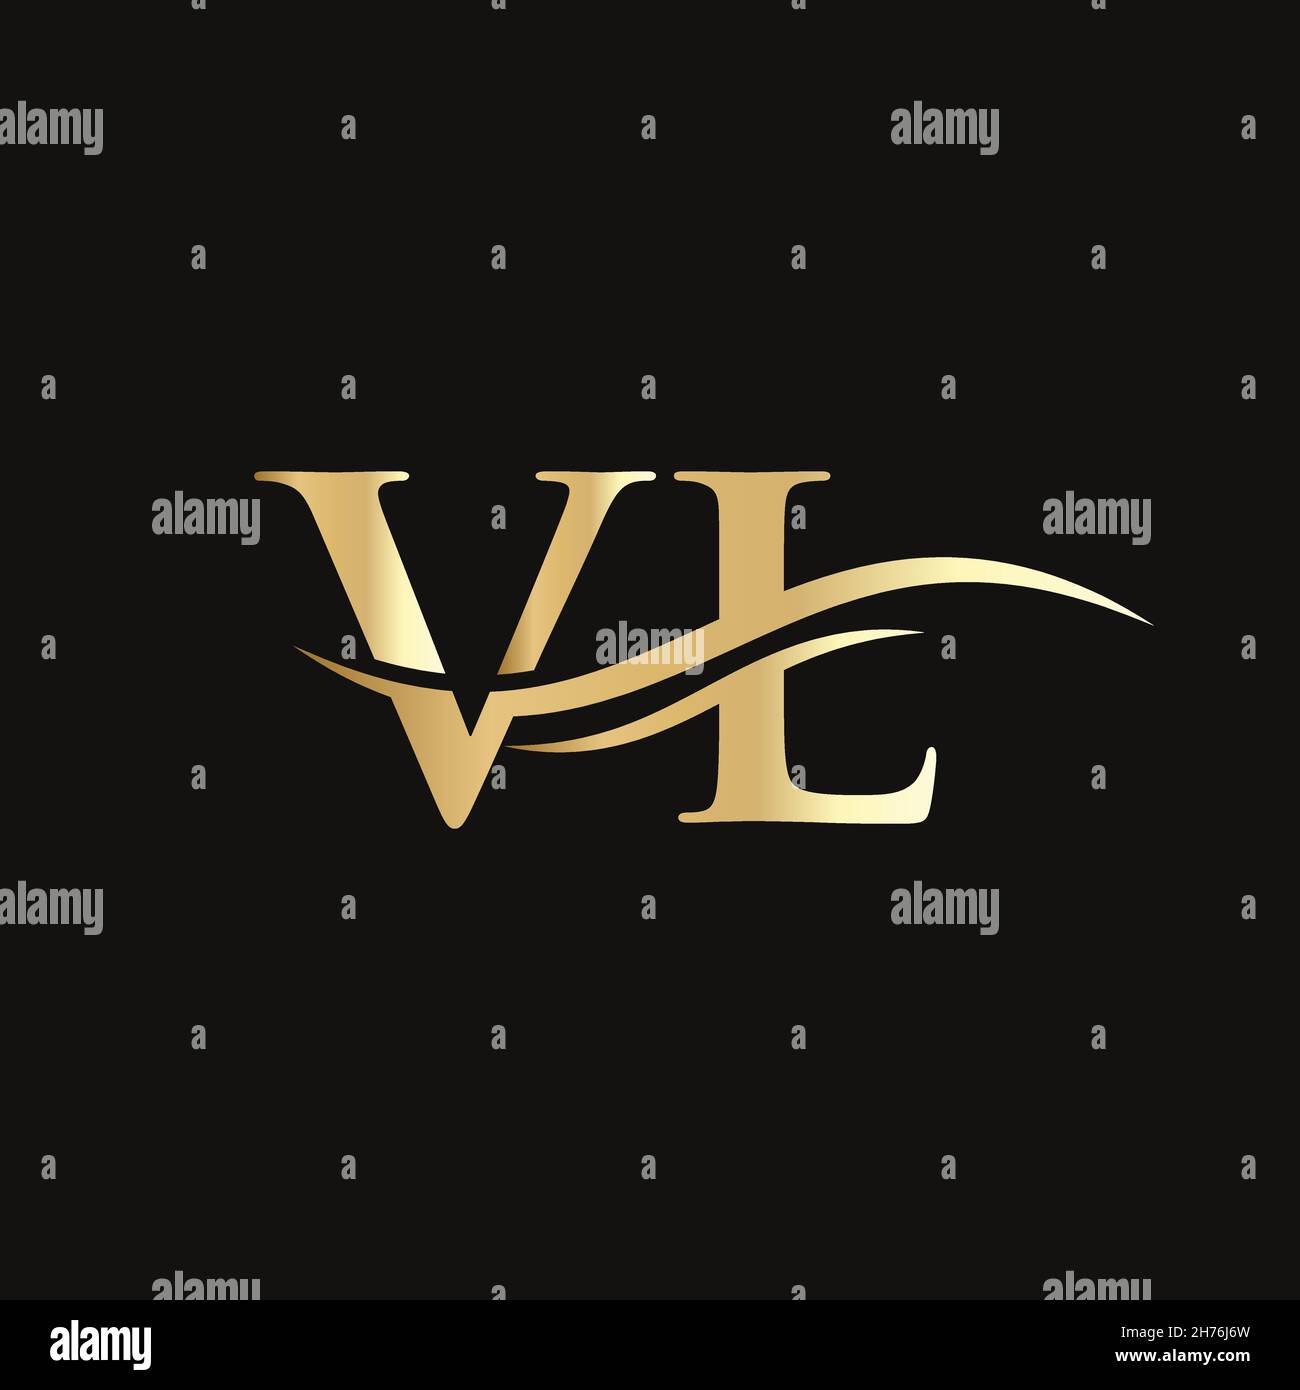 Vl monogram Stock Vector Images - Alamy